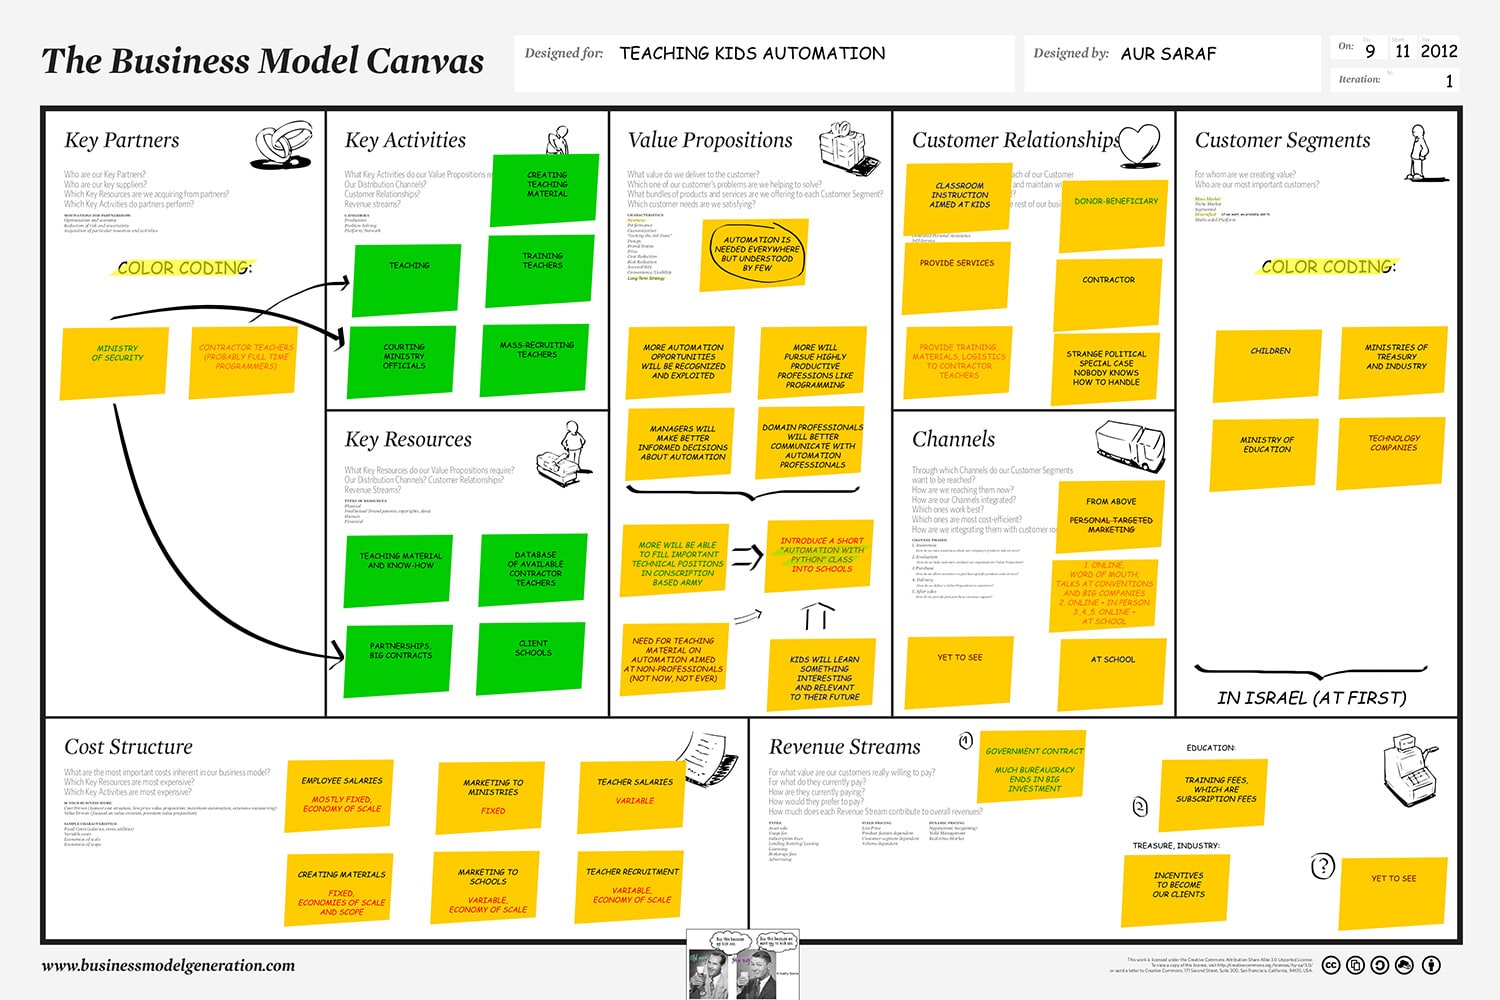 business canvas model magyarul